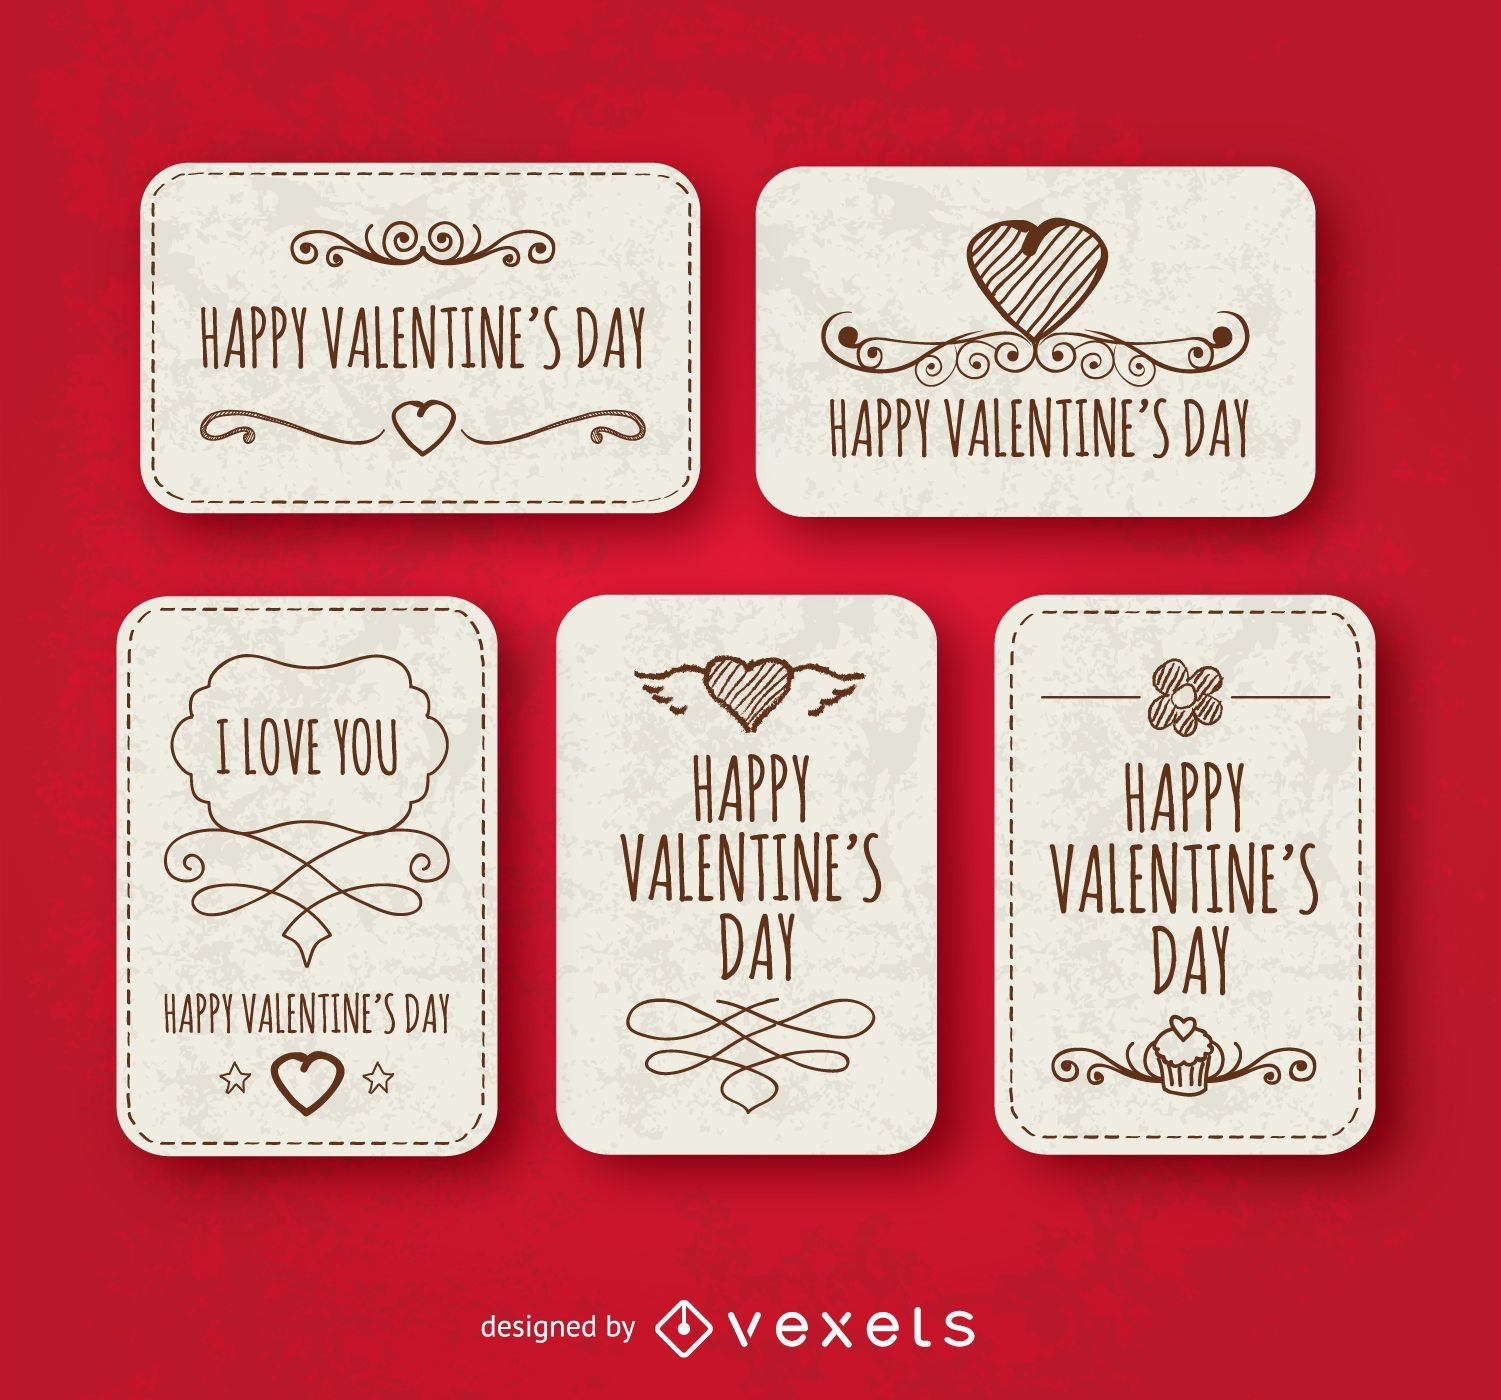 Happy valentine's day labels